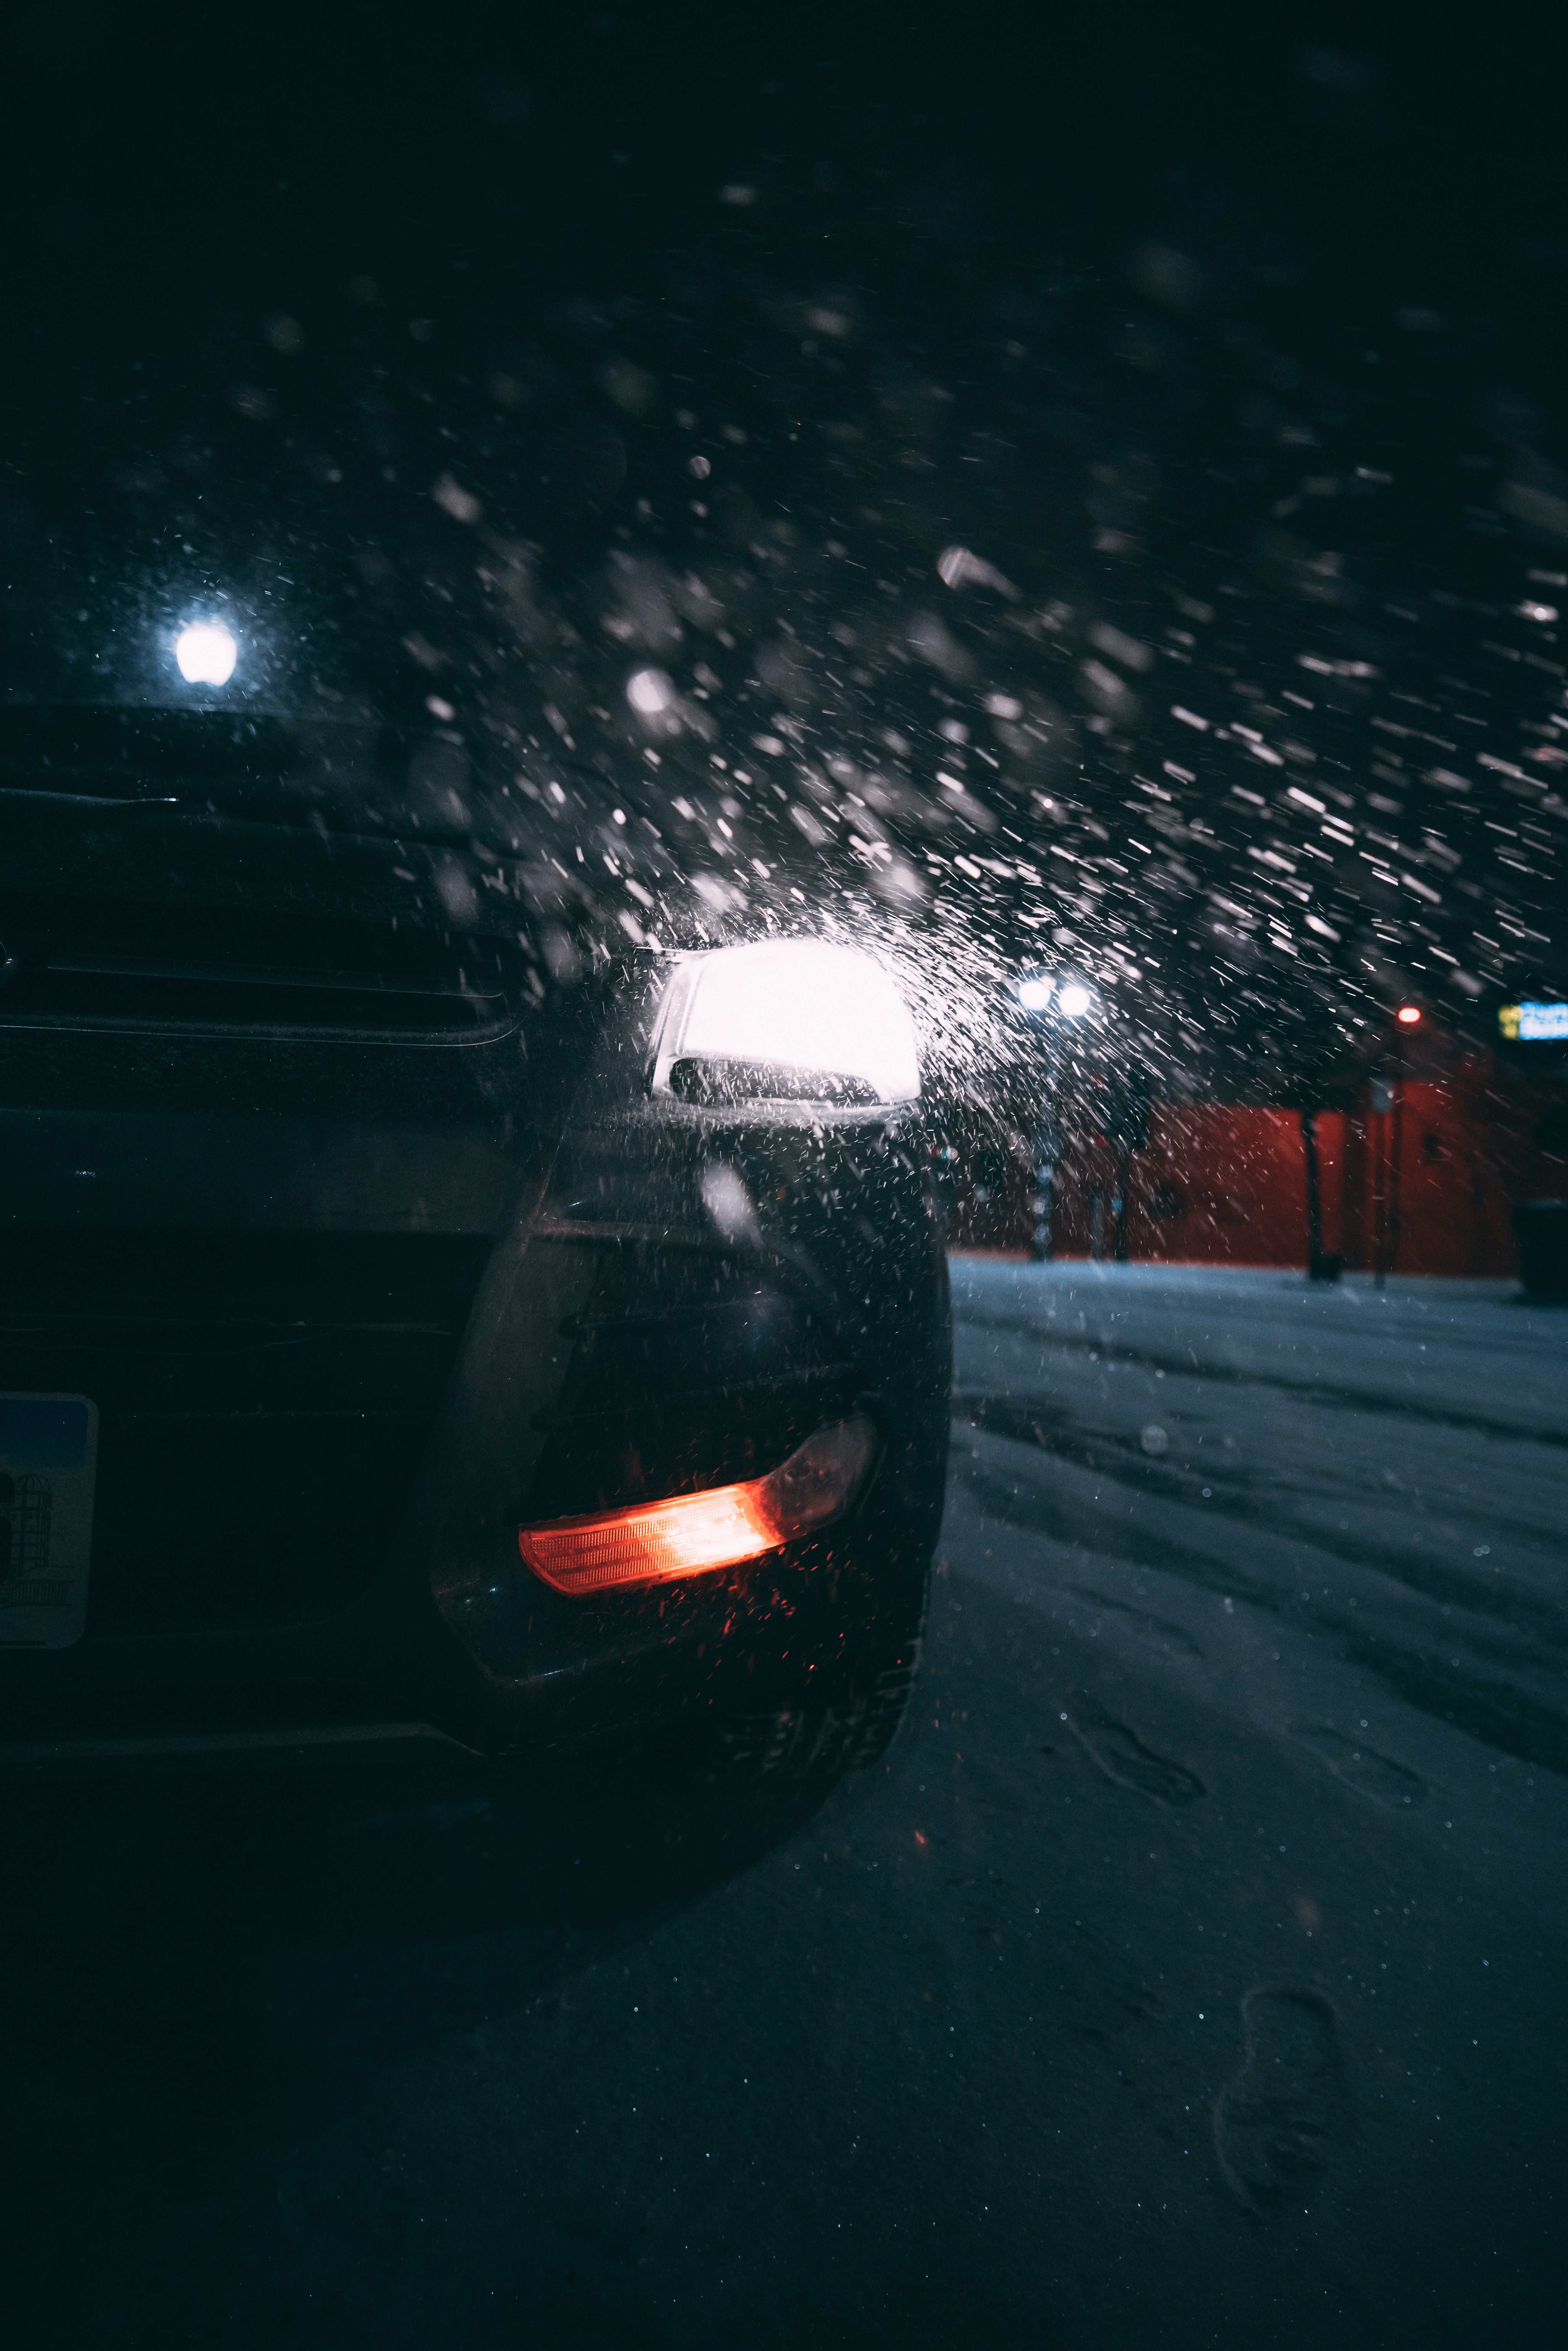 102502 descargar imagen coches, noche, nieve, faros, luces, carro, coche, vista trasera: fondos de pantalla y protectores de pantalla gratis